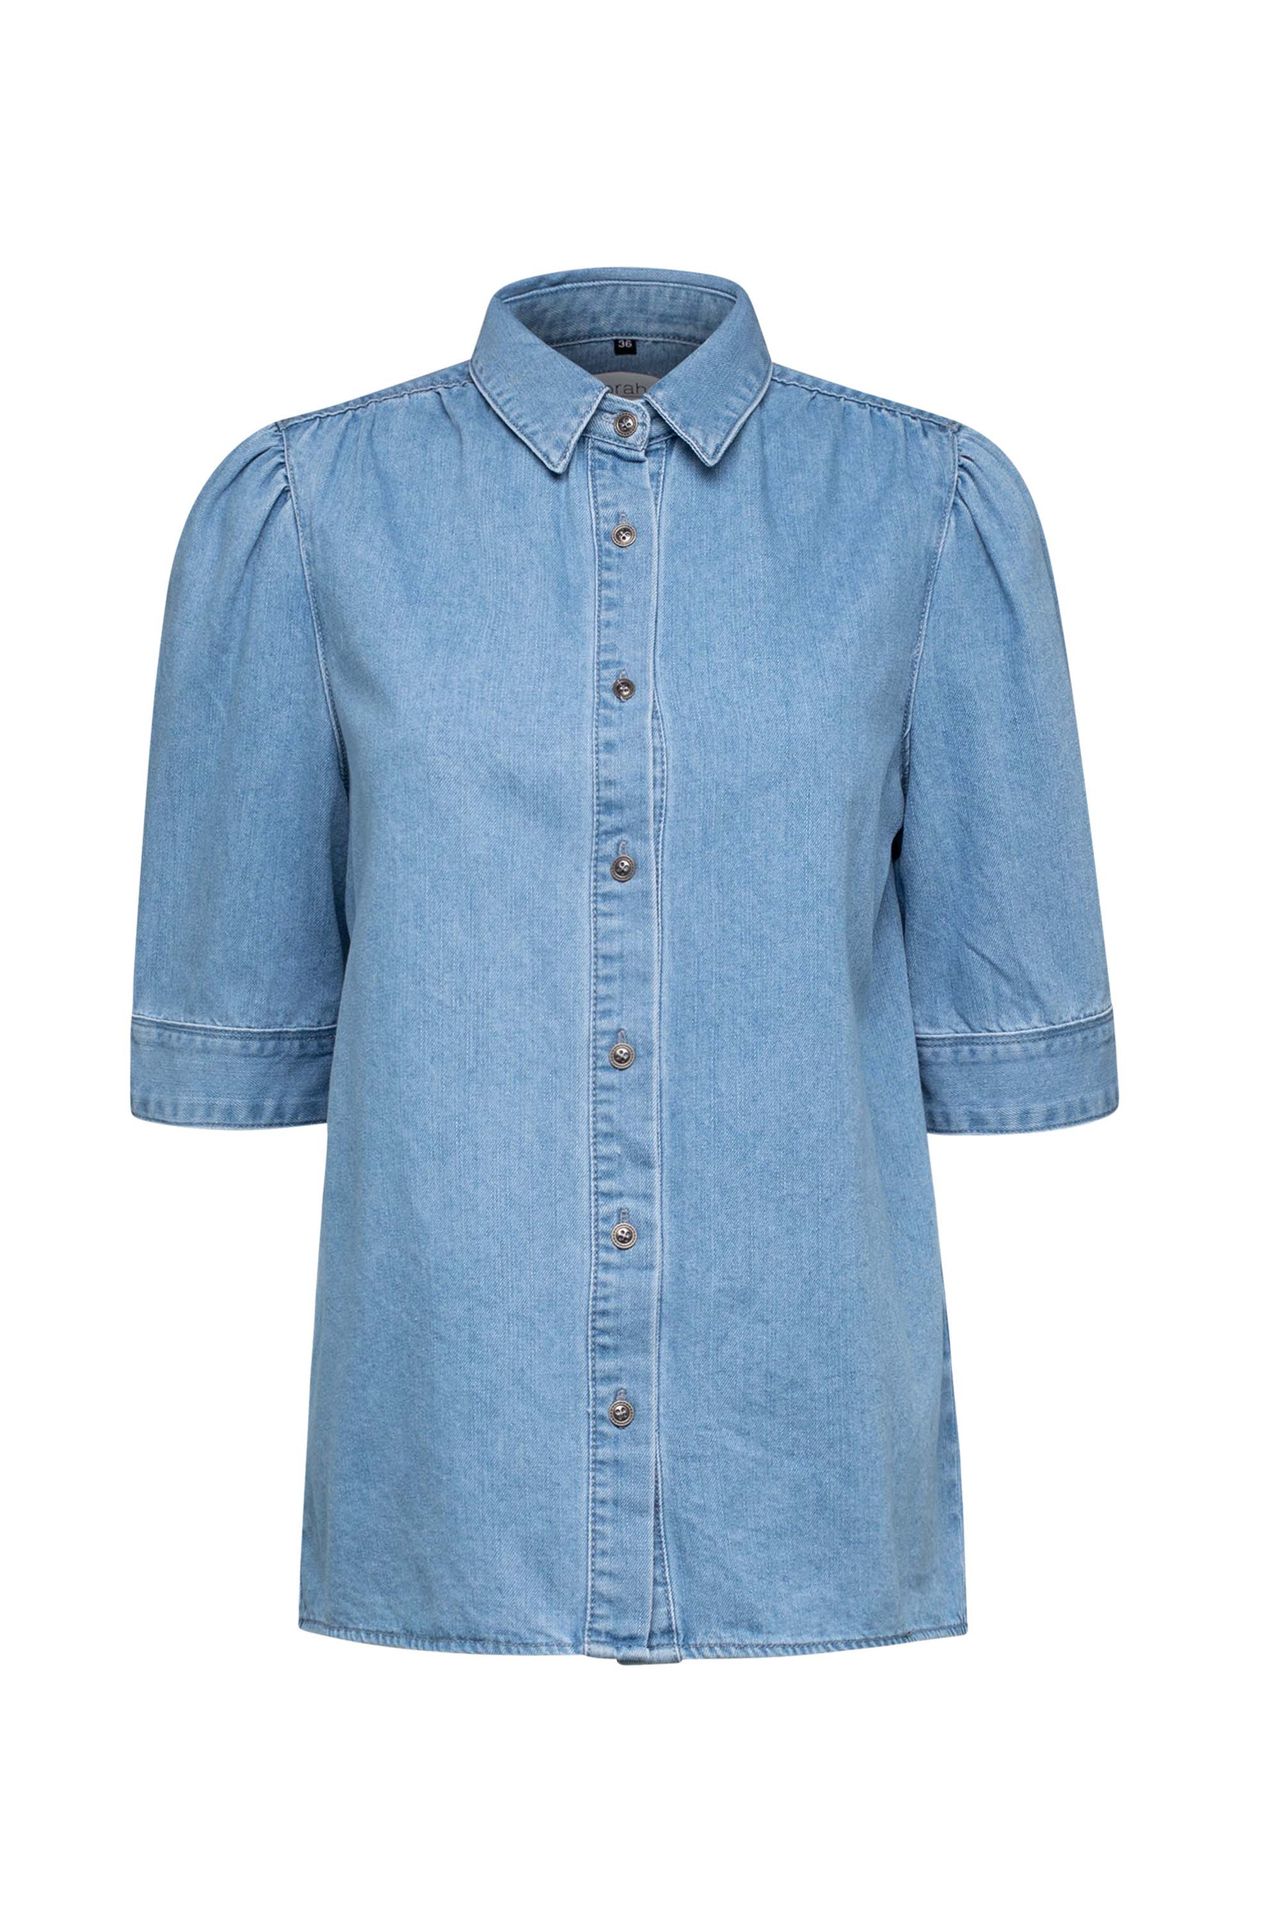 Norah Denim blouse blauw blue 212390-400-44